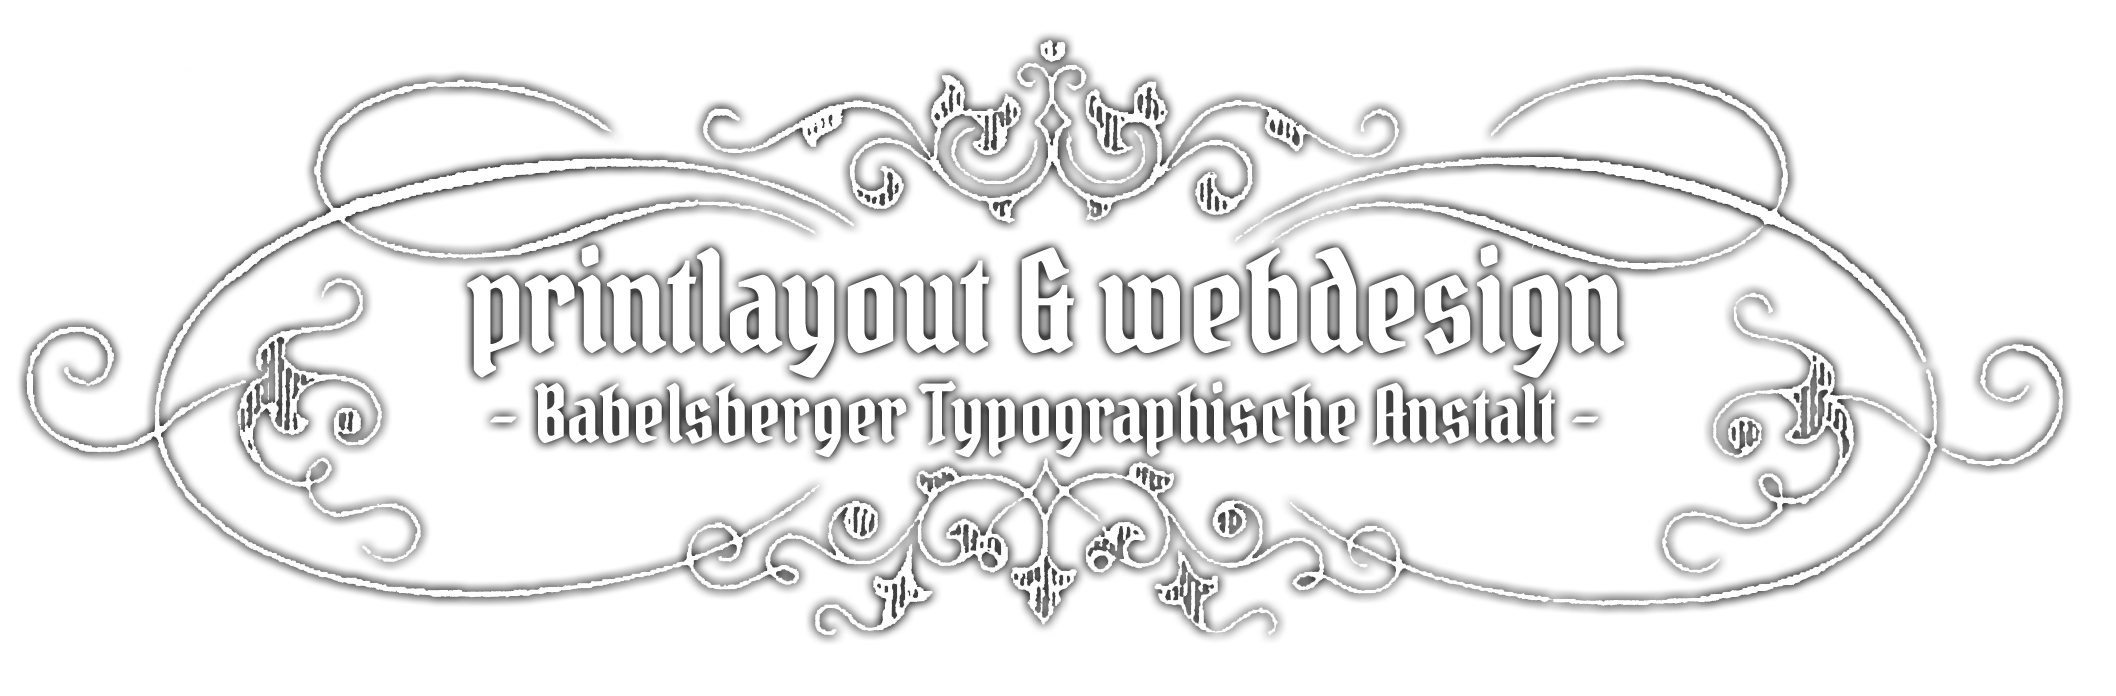 printlayout & webdesign Logo